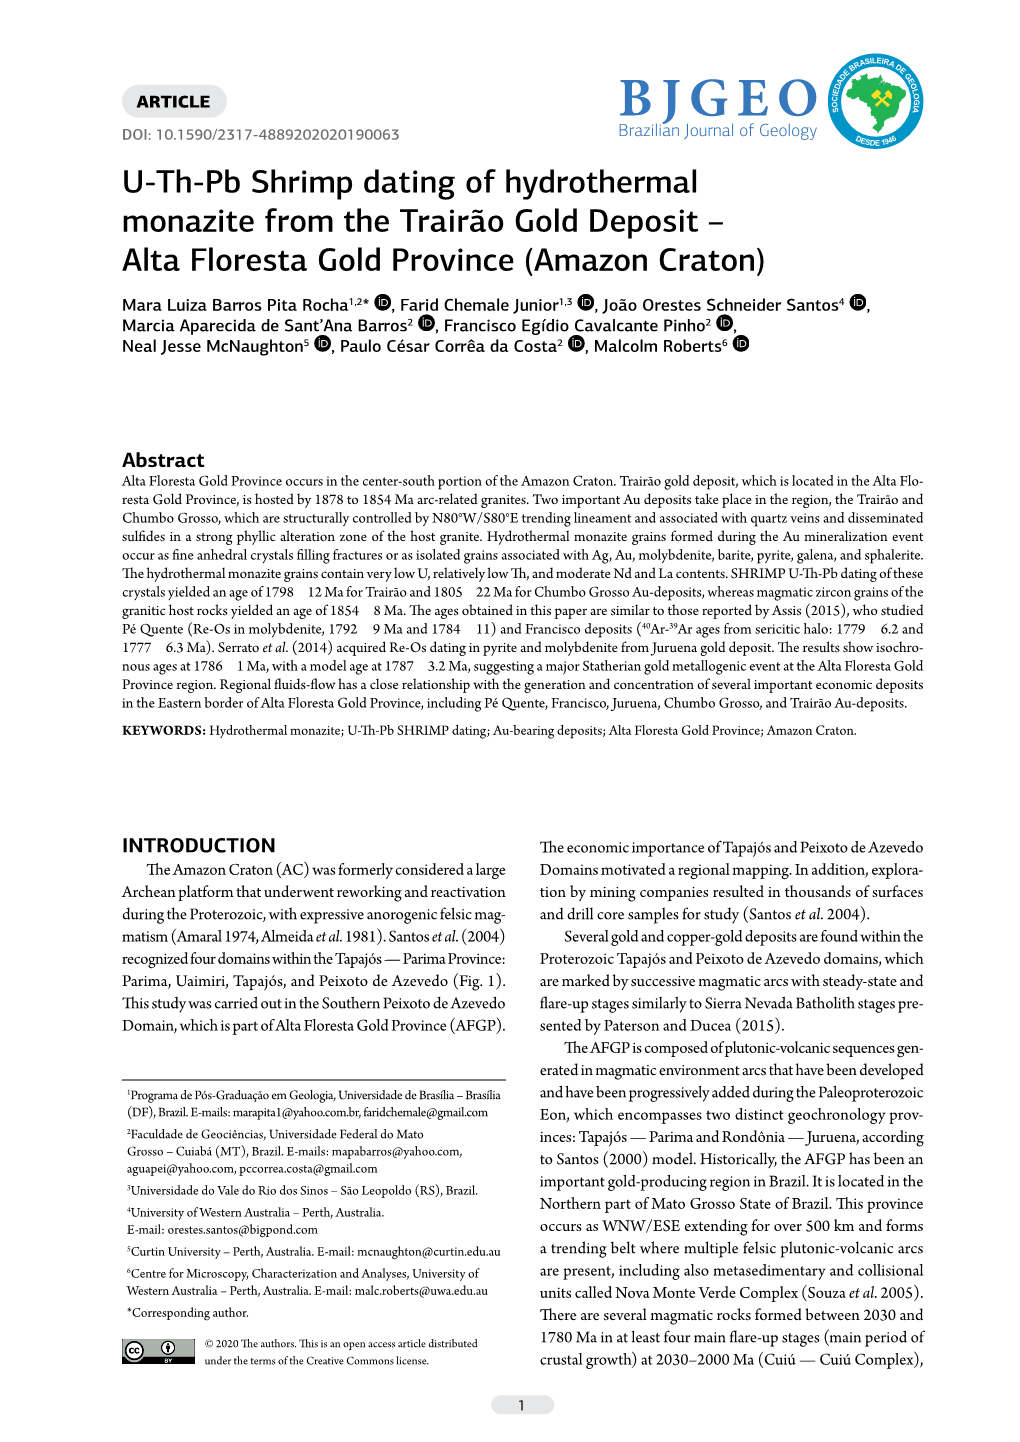 U-Th-Pb Shrimp Dating of Hydrothermal Monazite from the Trairão Gold Deposit – Alta Floresta Gold Province (Amazon Craton)